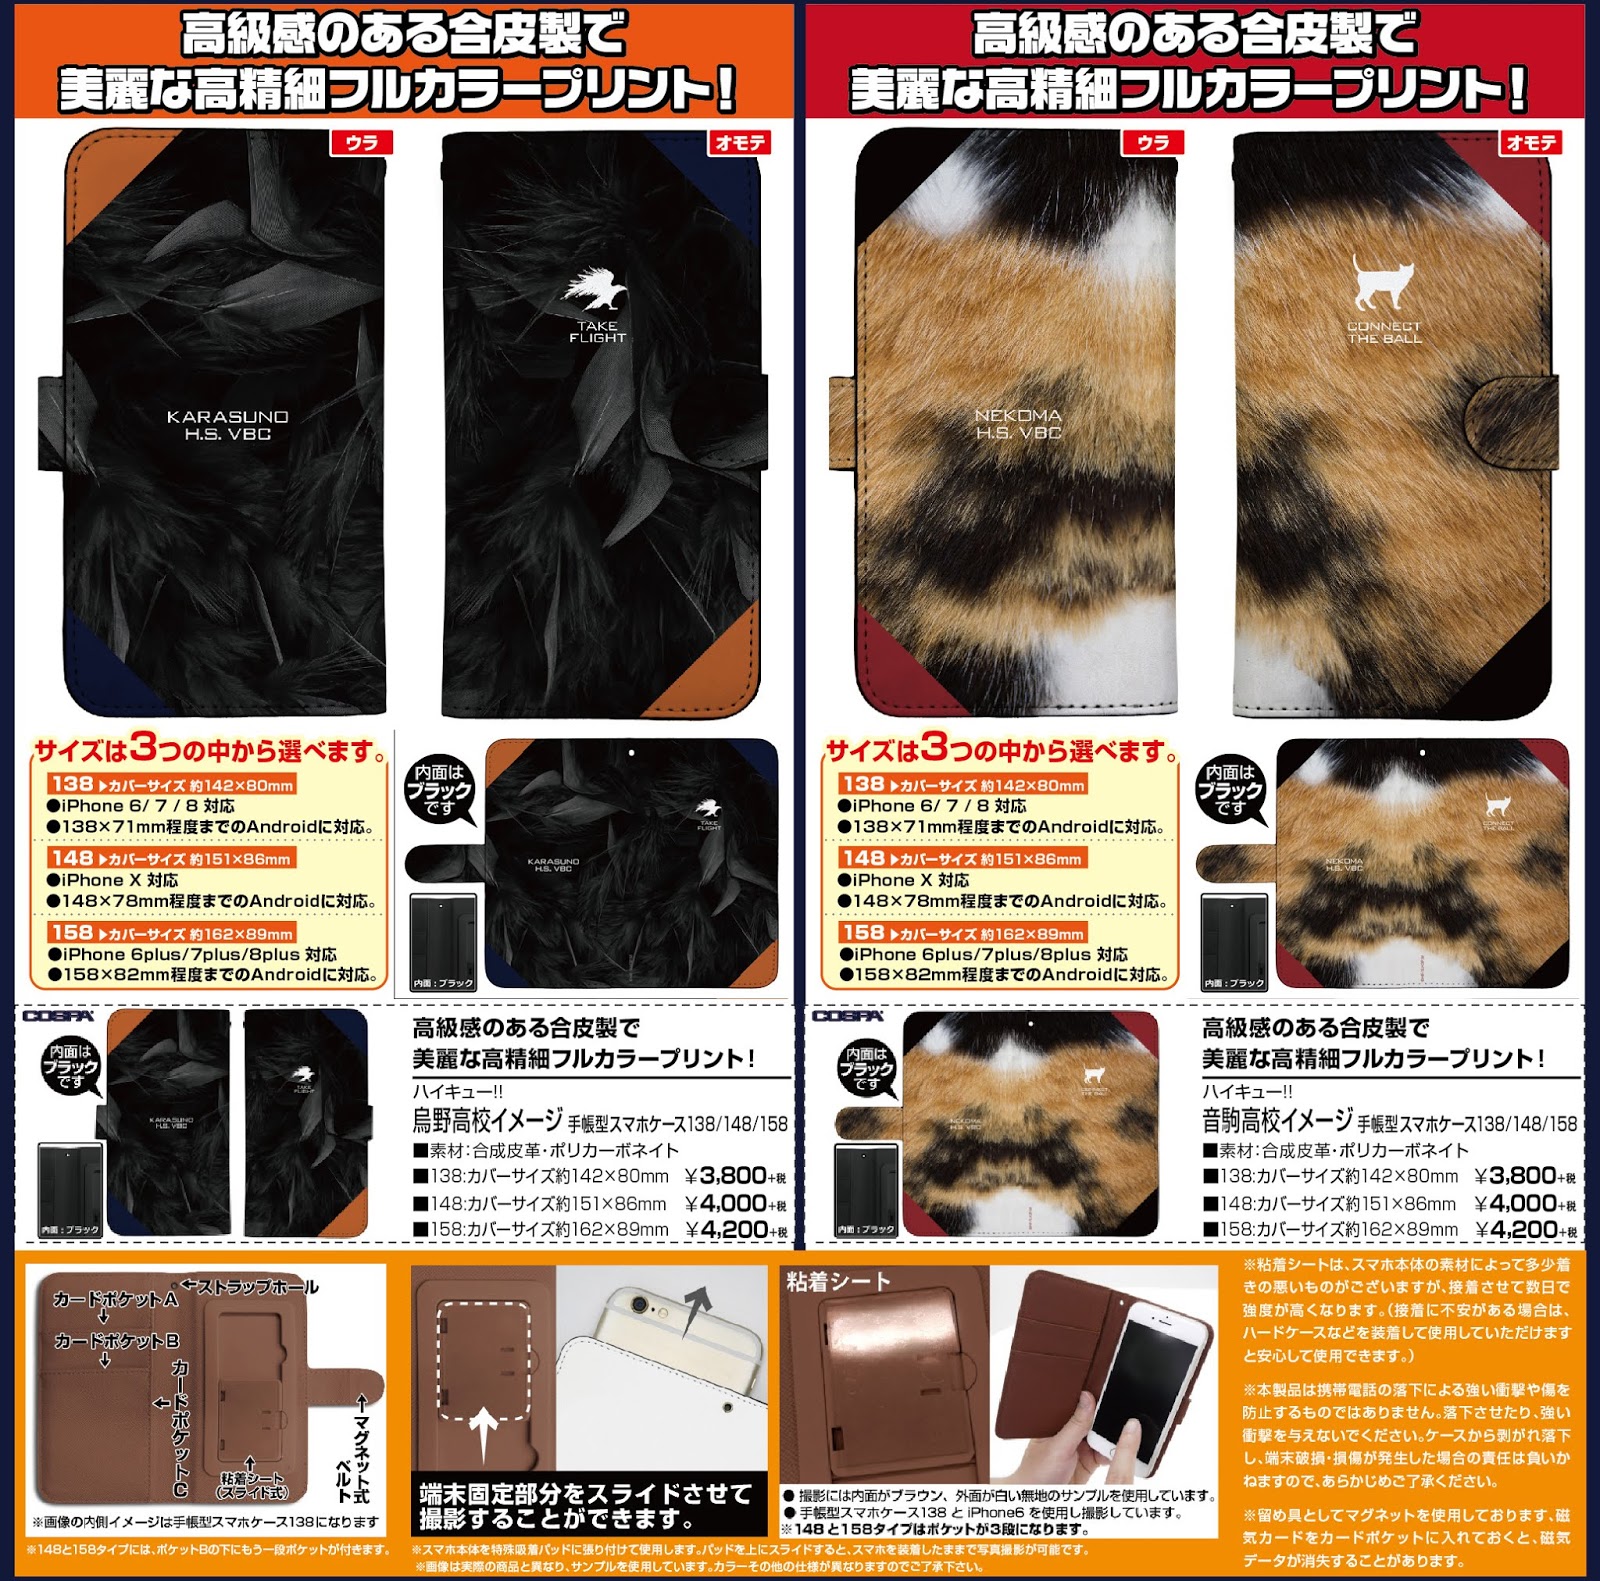 Rev 代購 預購 ハイキュー 手帳型スマホケース 各種 Haikyu Book Type Smartphone Case